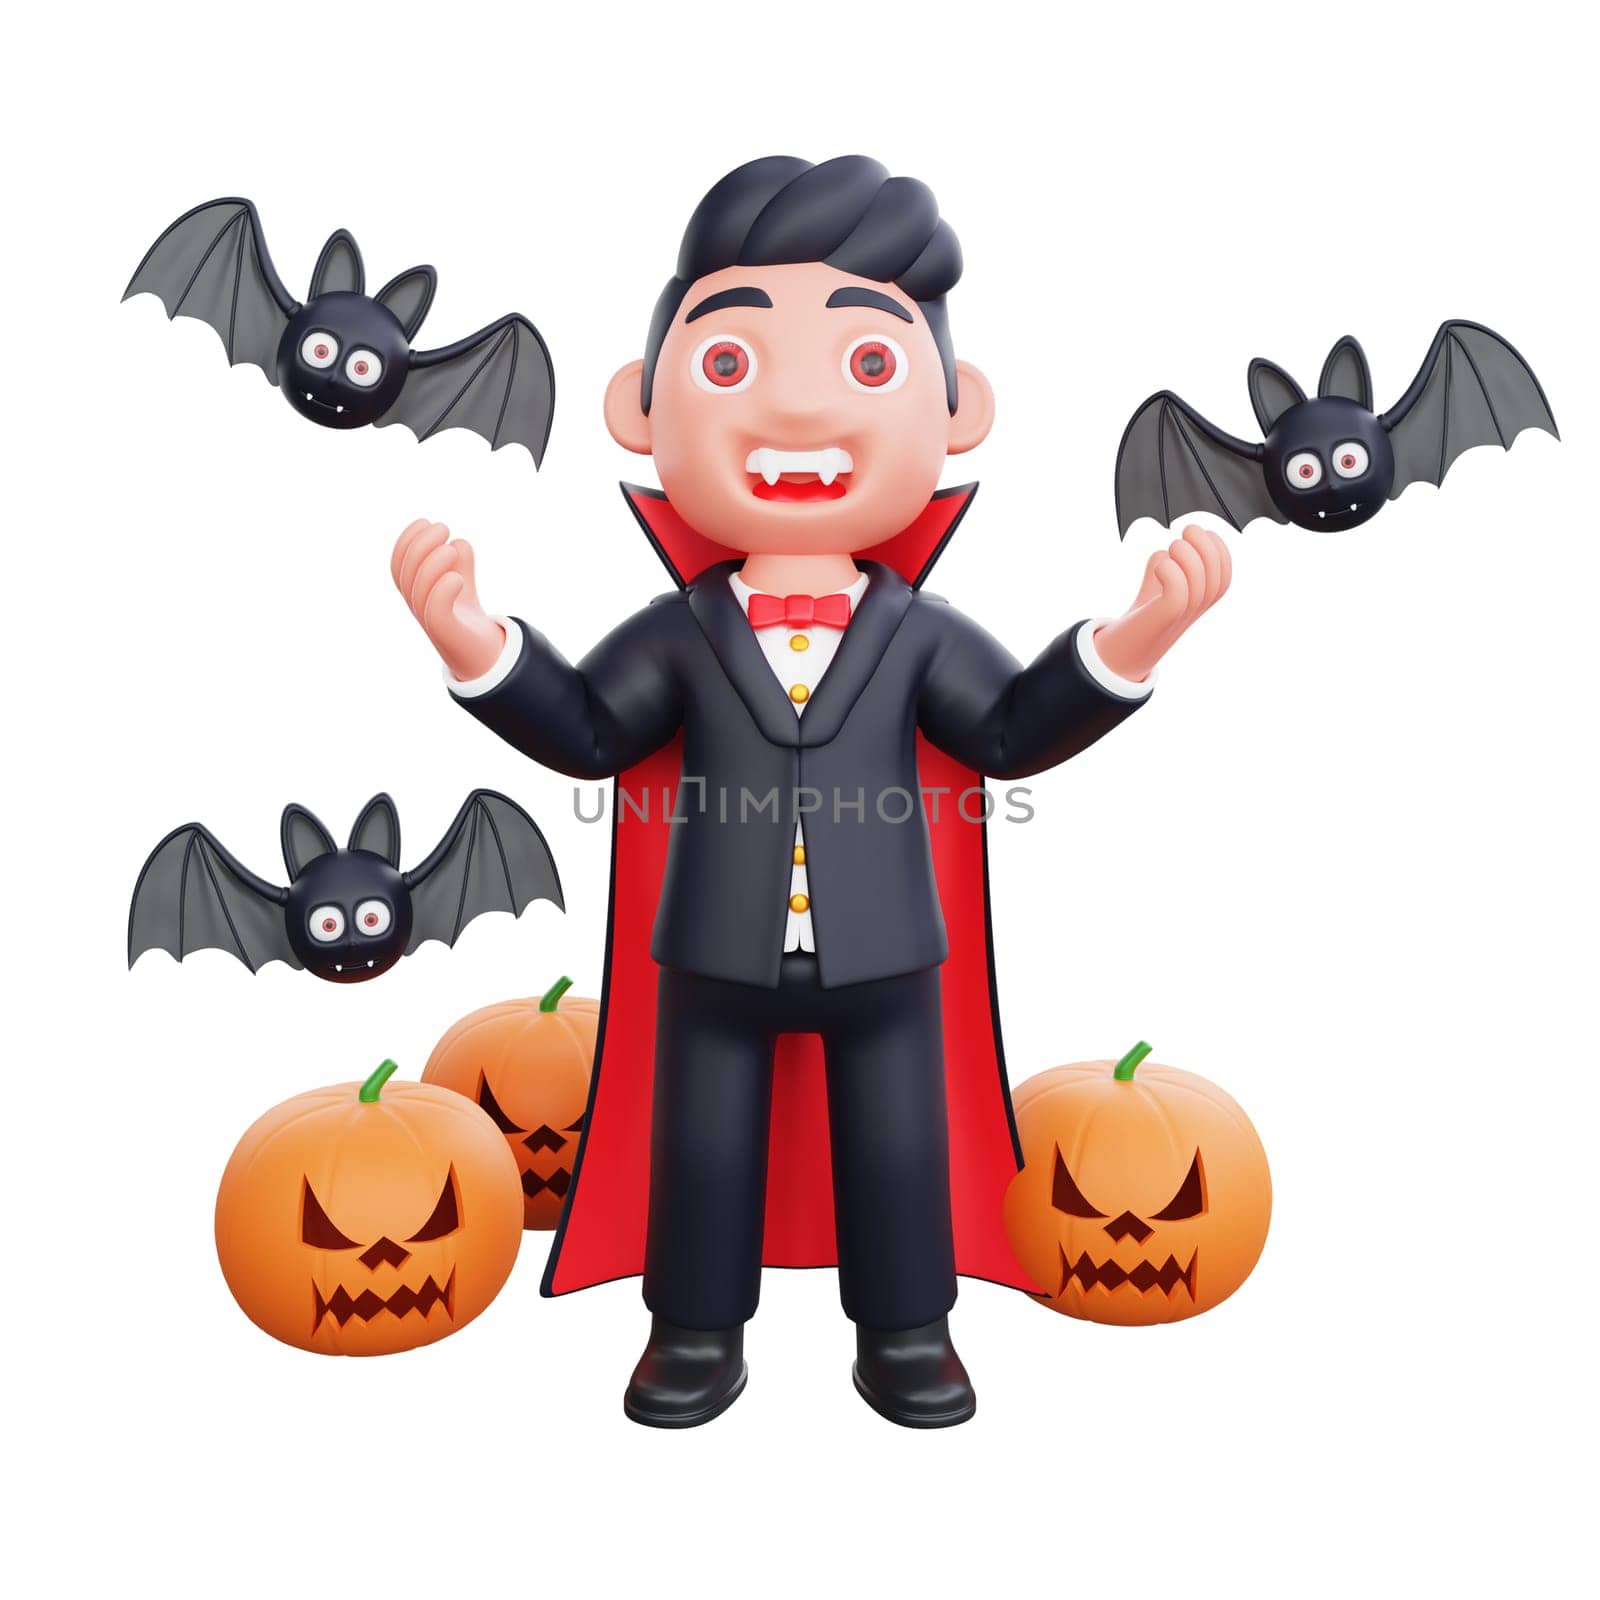 3d cute character halloween vampire scary design illustration